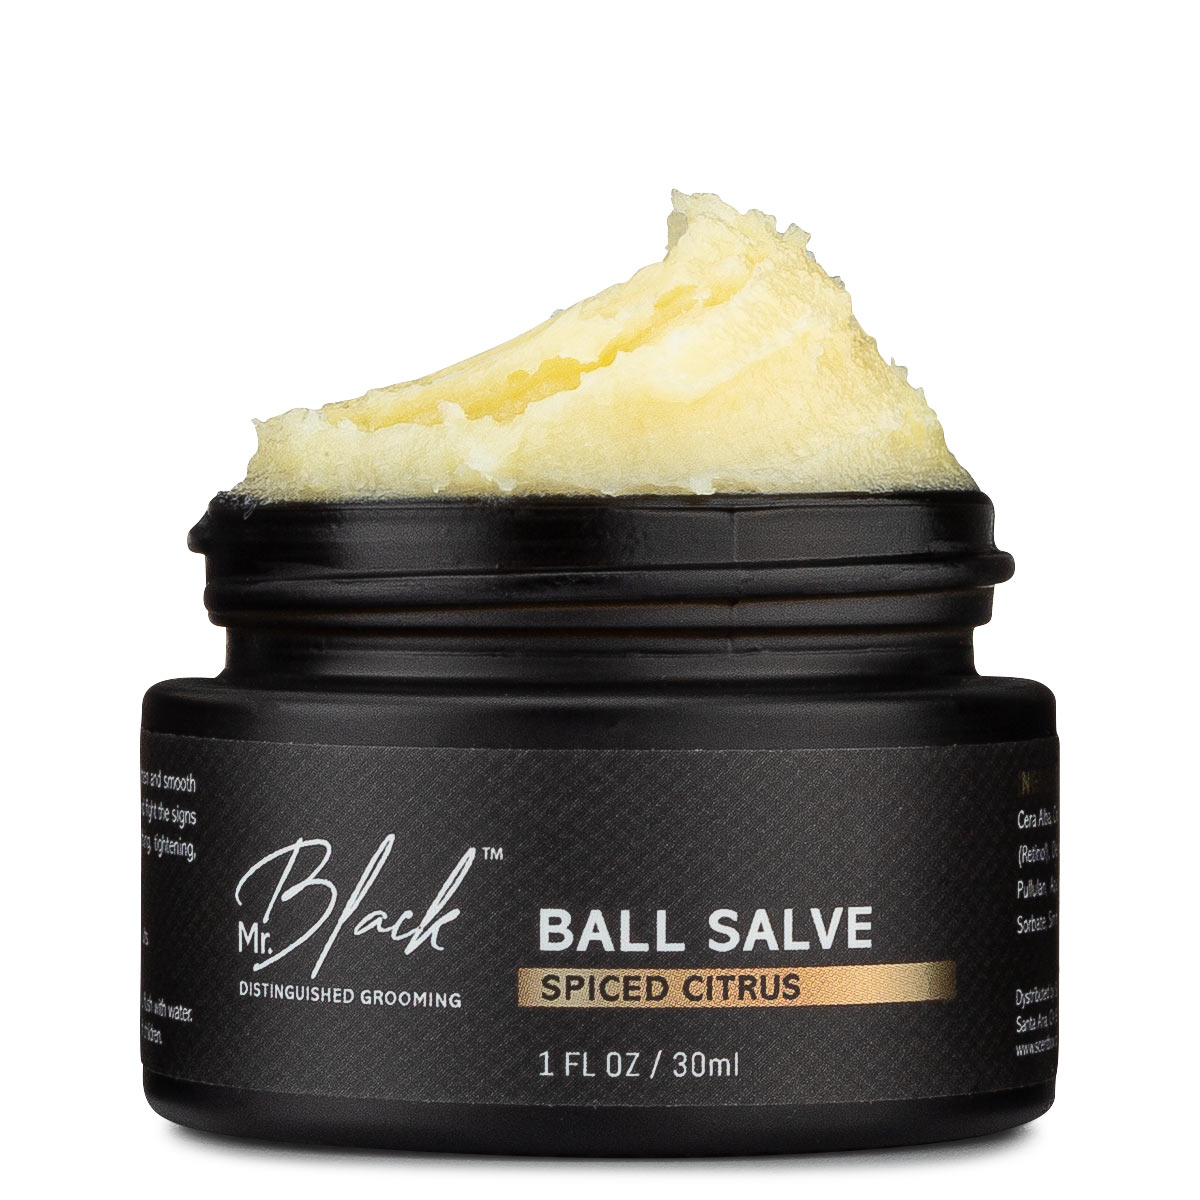 Ball Salve Anti-Aging - Spiced Citrus Mr. Black Image